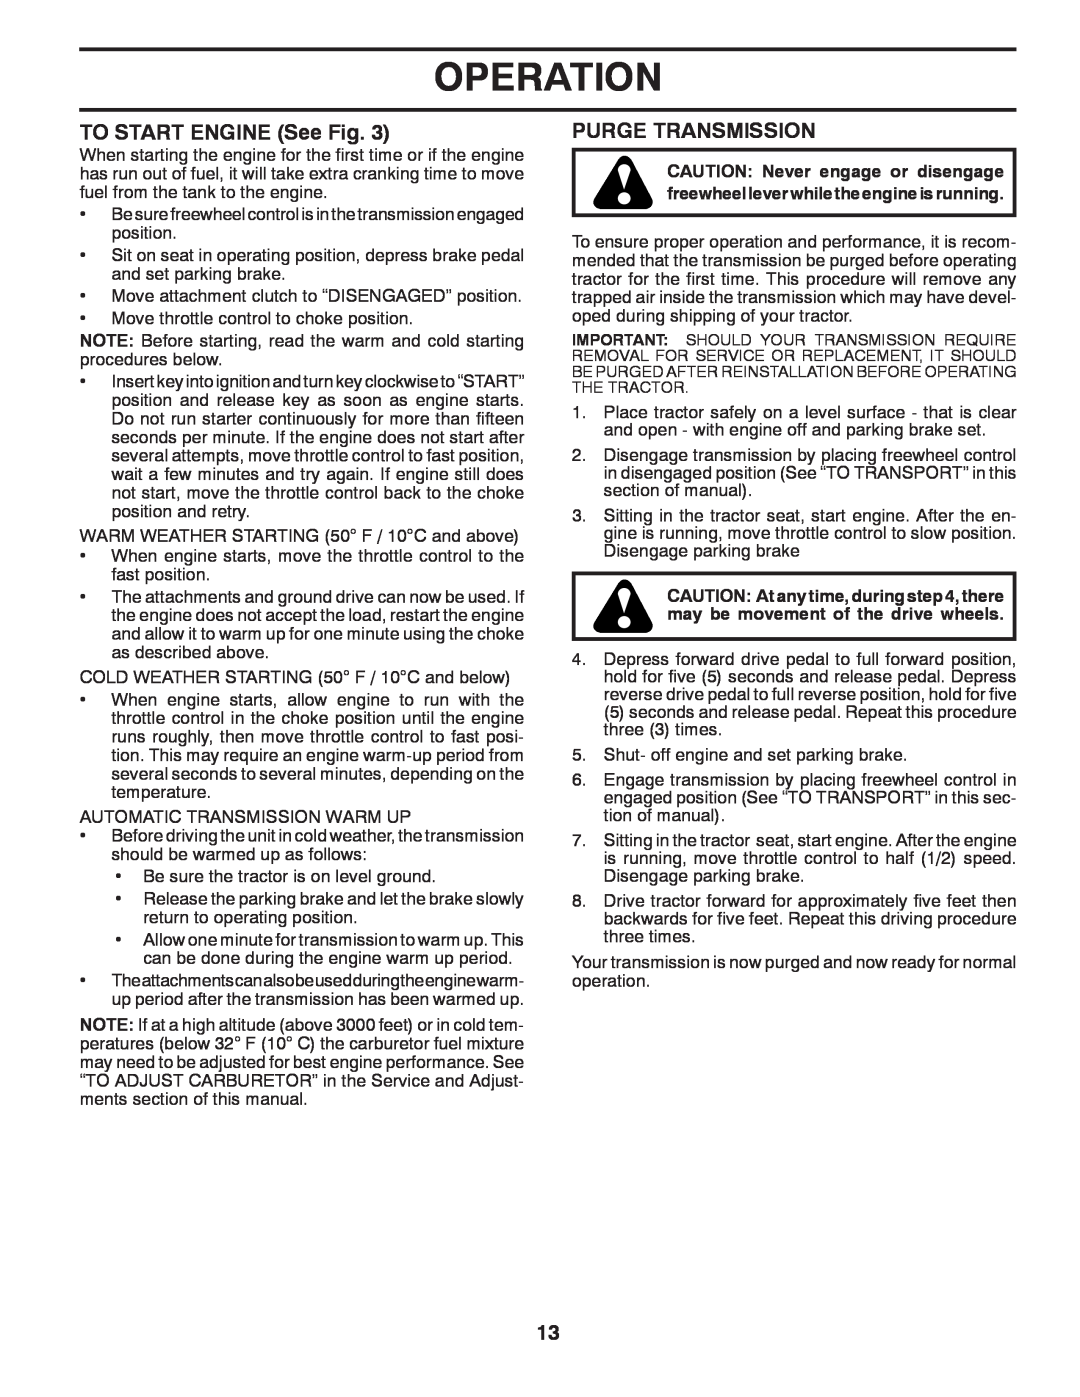 Husqvarna YTH2648TDRF owner manual TO START ENGINE See Fig, Purge Transmission, Operation 